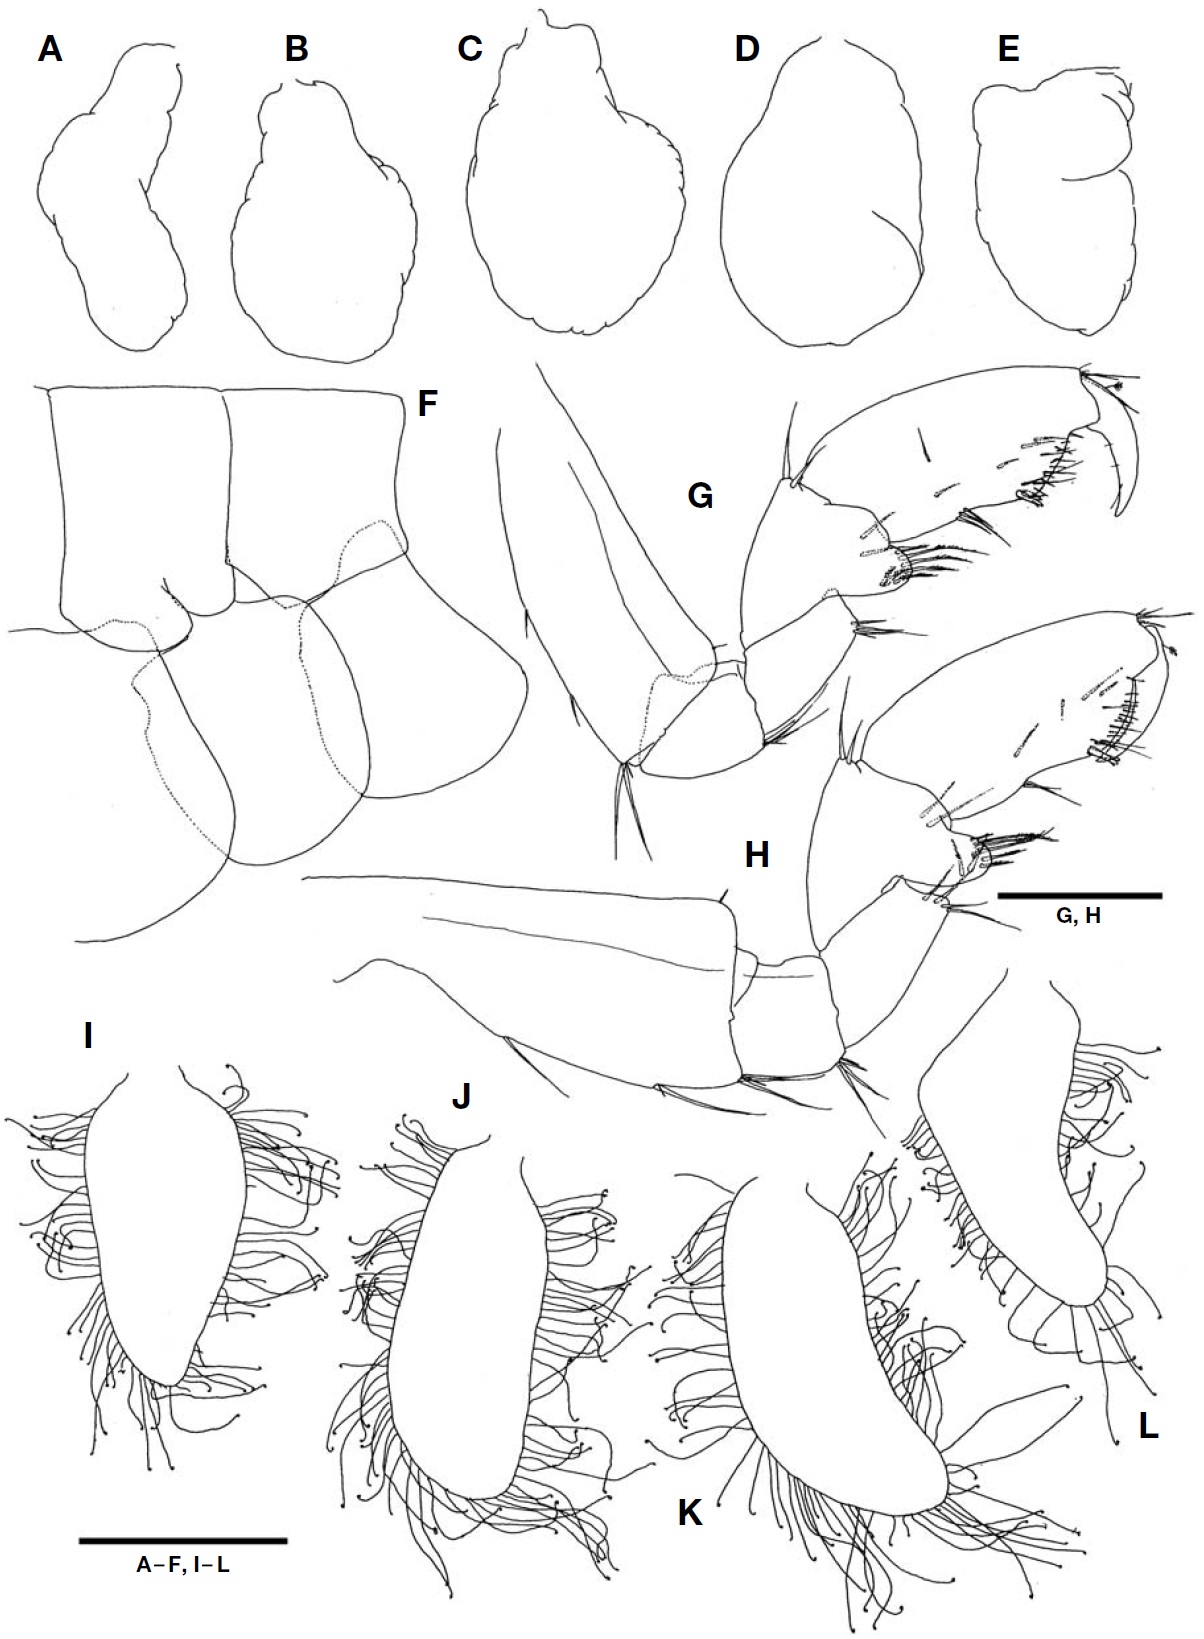 Protohyale (Boreohyale) triangulata (Hiwatari, 2003), male (A-E) and female (F-L). A-E, Coxal gills on gnathopod 2- pereopod 6; F, Preamplexing notch; G, Gnathopod 1; H, Gnathopod 2; I, Oostegite on gnathopod 2; J-L, Oostegites on pereopod 3-5. Scale bars: A-F, I-L=0.5 mm, G, H=0.2 mm.